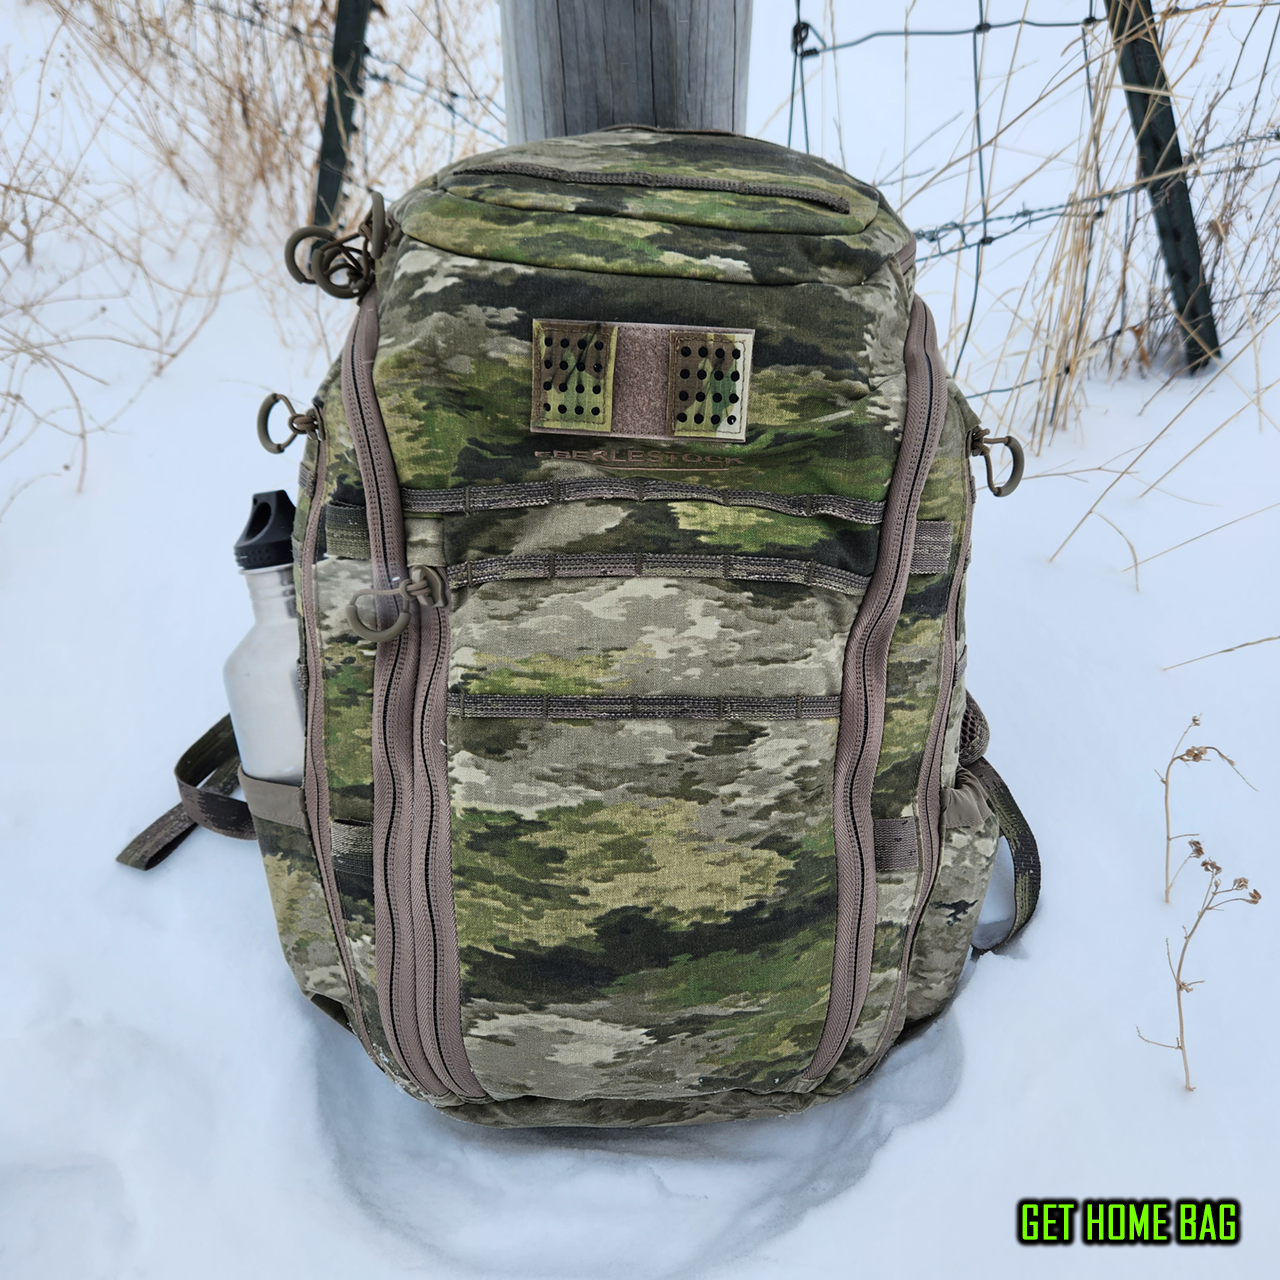 The Get-Home Bag